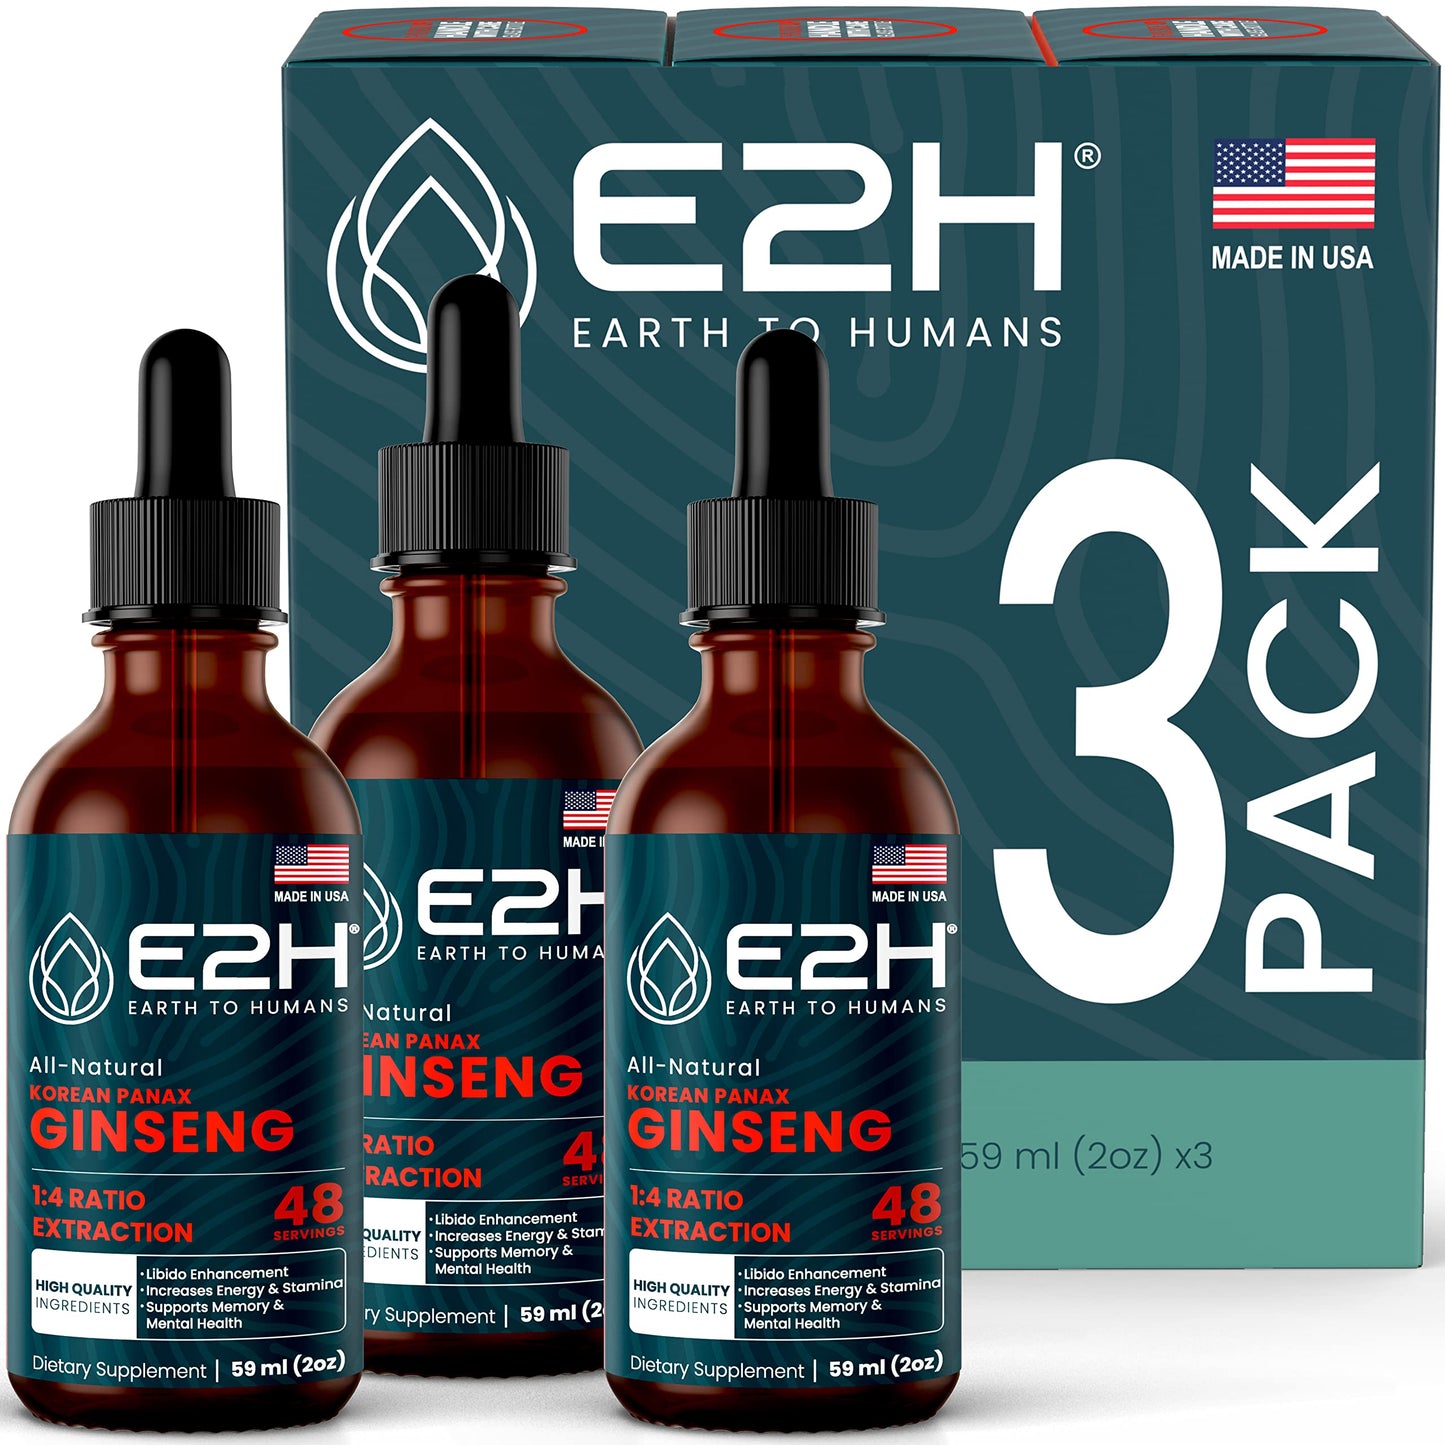 
                  
                    E2H Liquid Korean Panax Ginseng Extract - Increase Energy & Focus - All-Natural Organic Korean Red Ginseng for Brain Health & Cognitive Function Improvement | Non-GMO, Vegan (3 Bottles)
                  
                